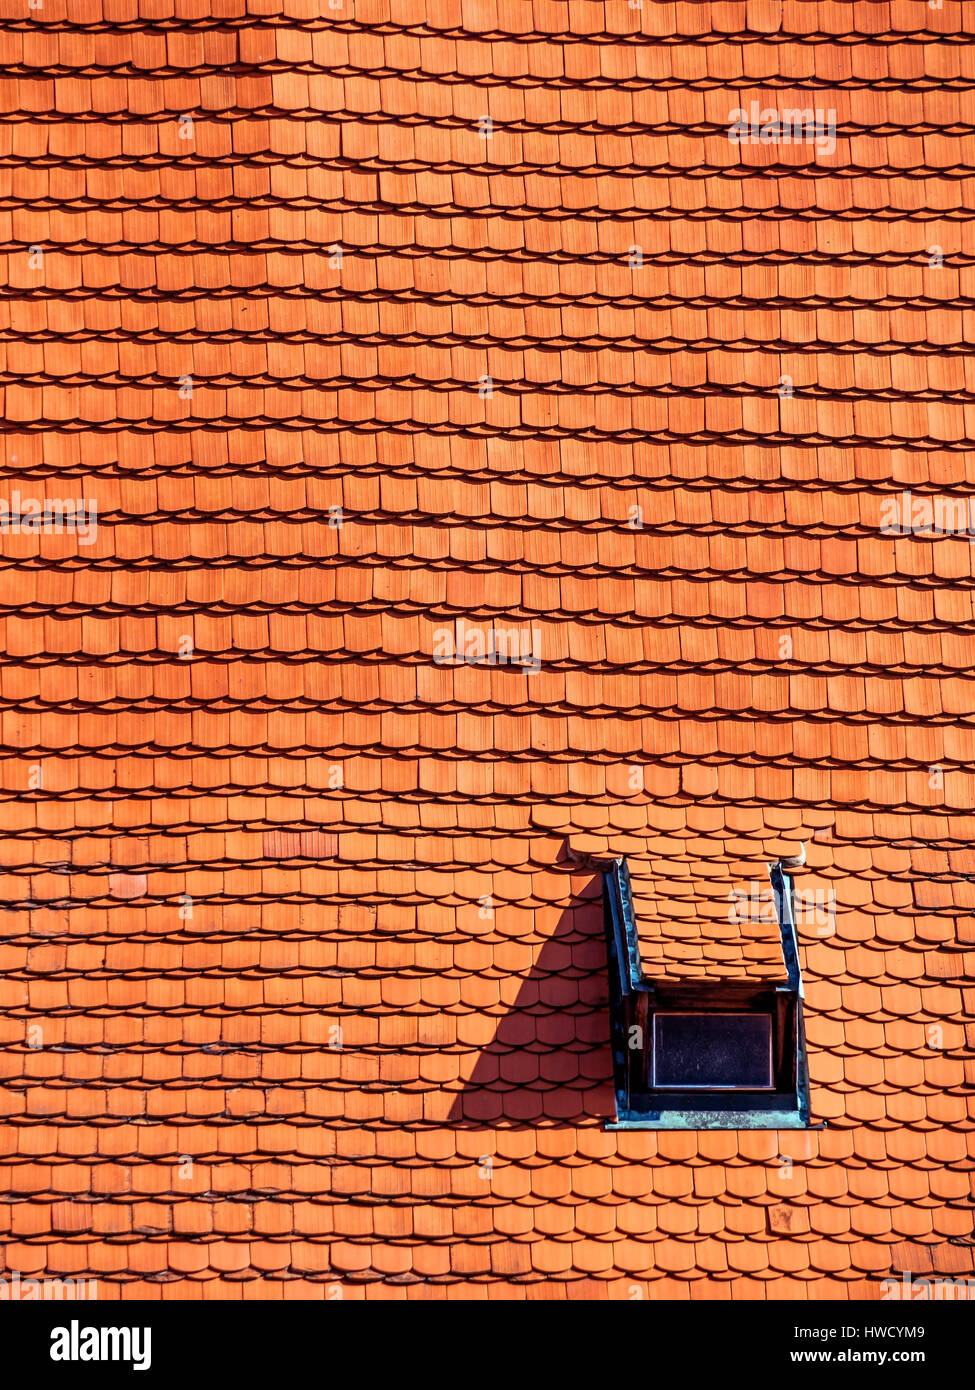 Roof with old roofing tile and Gaupenfenster, Dach mit alten  Dachziegel und Gaupenfenster Stock Photo